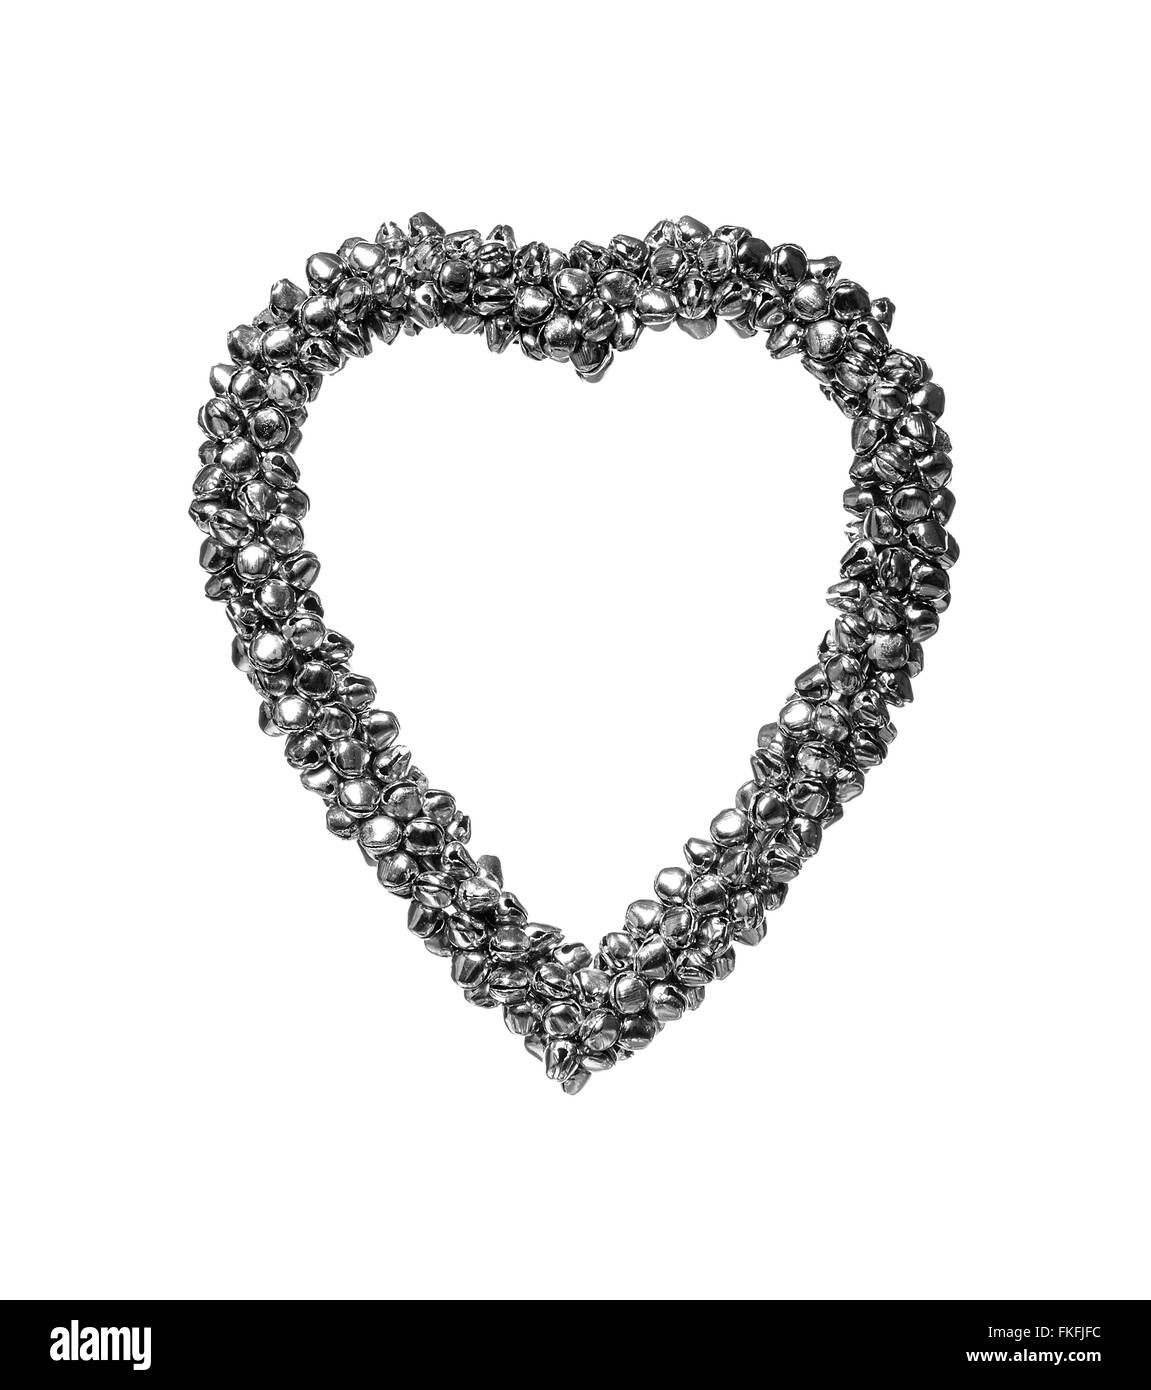 Iron heart on a white background. Stock Photo